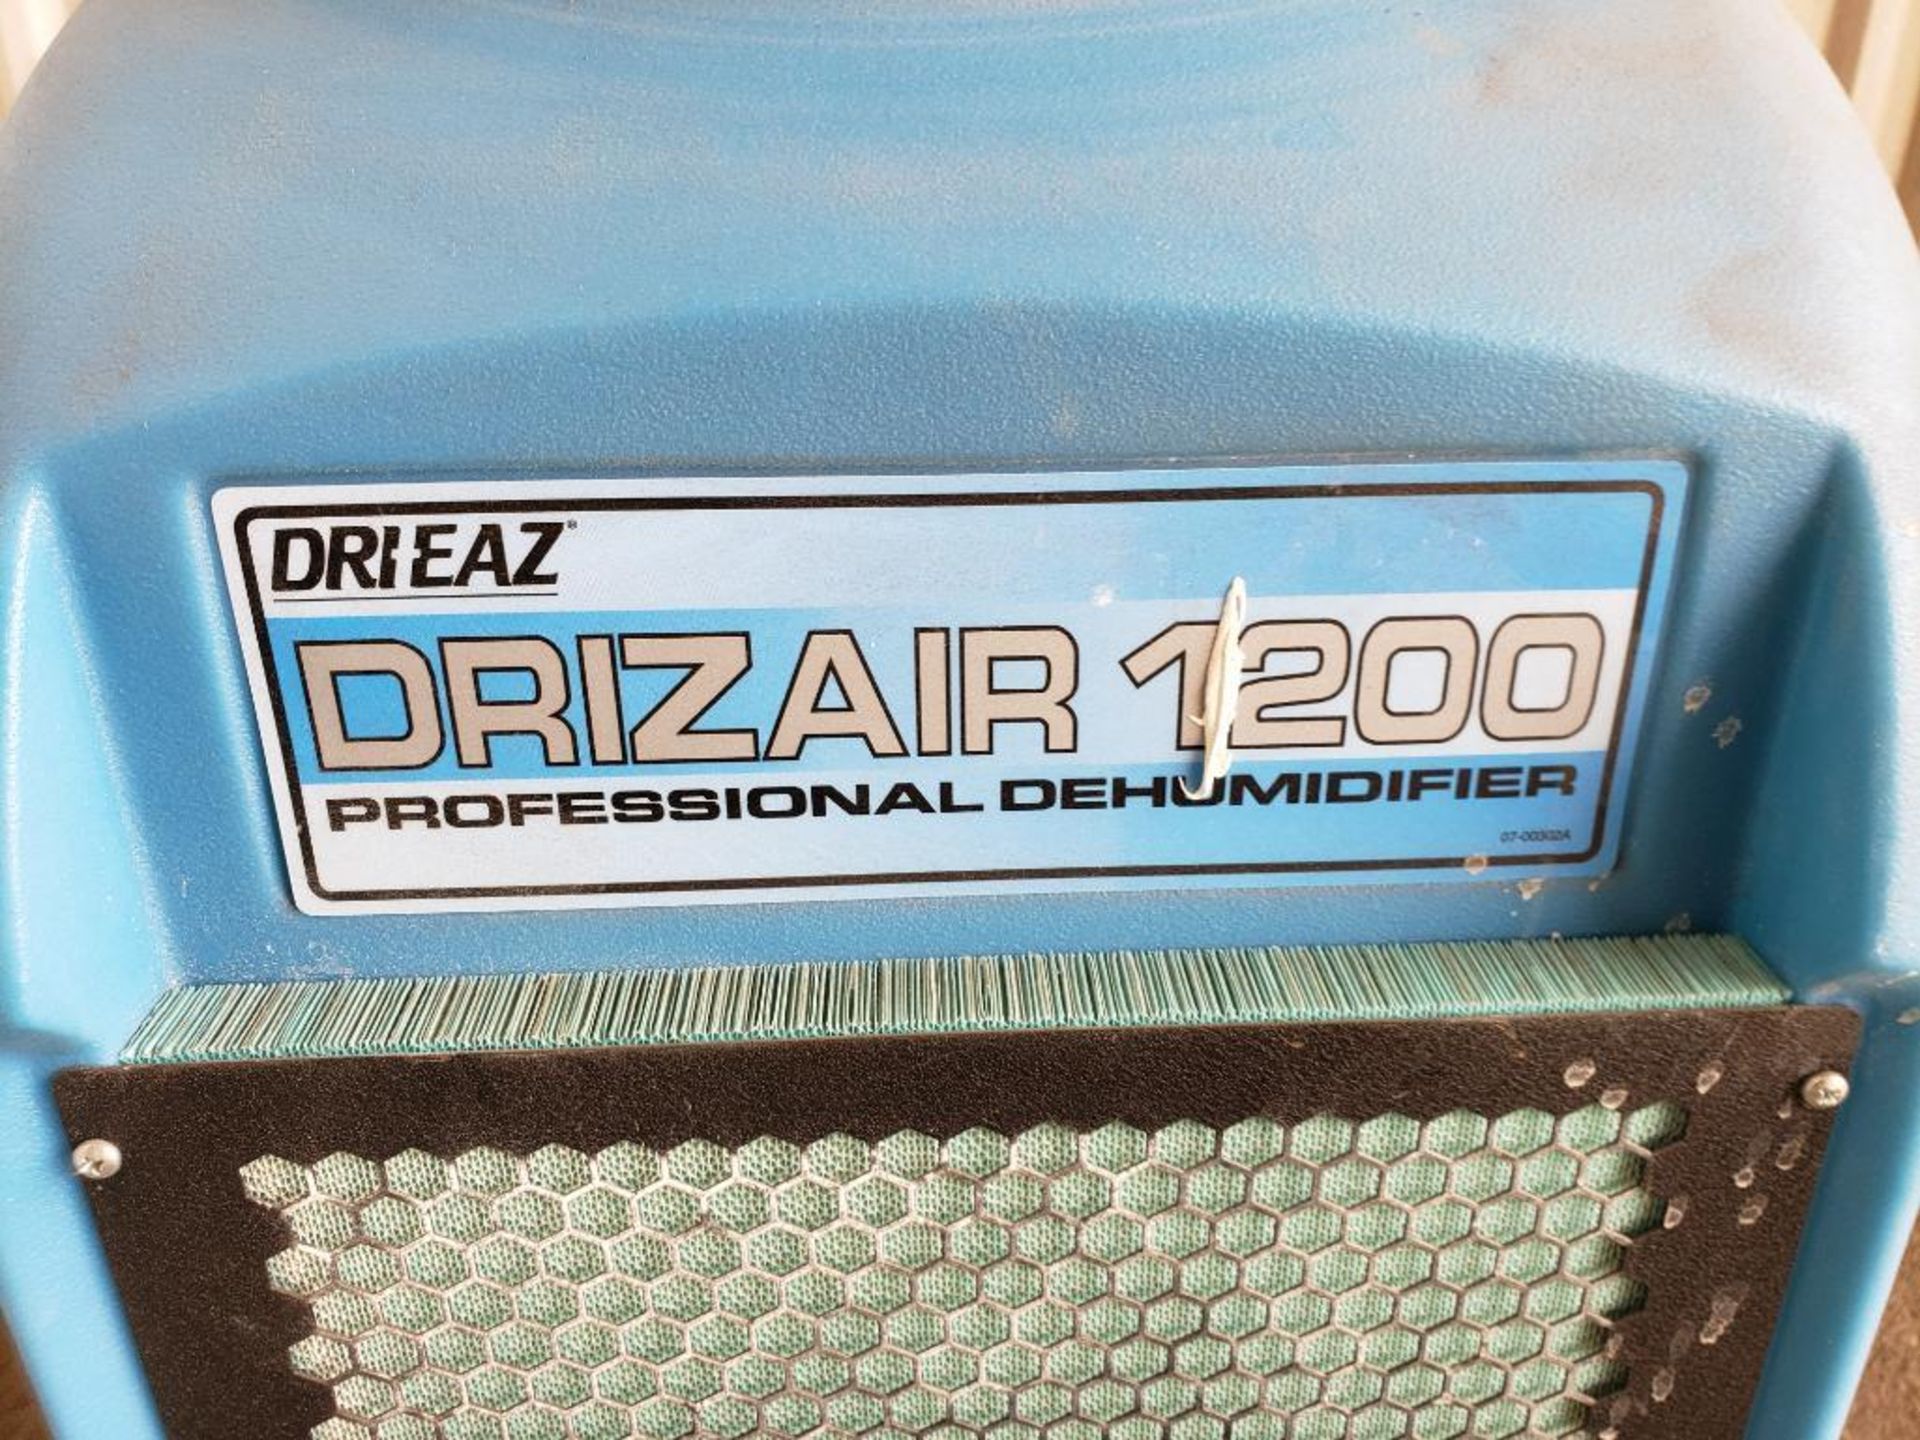 Dri-Eaz Drizair 1200 professional dehumidifier. F203-A, 115V. - Image 2 of 7